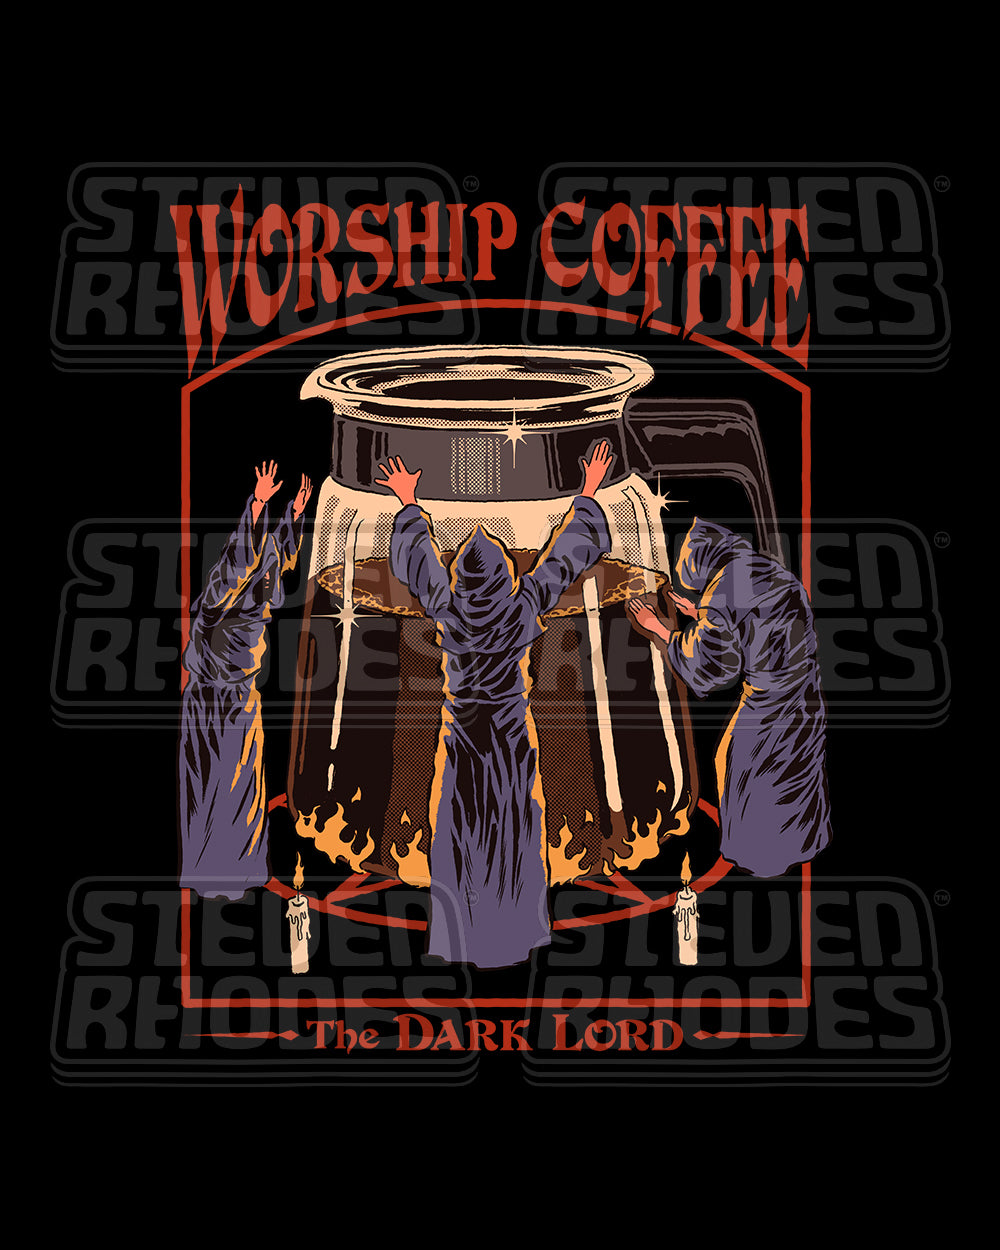 Worship Coffee Tote Bag Australia Online #colour_black